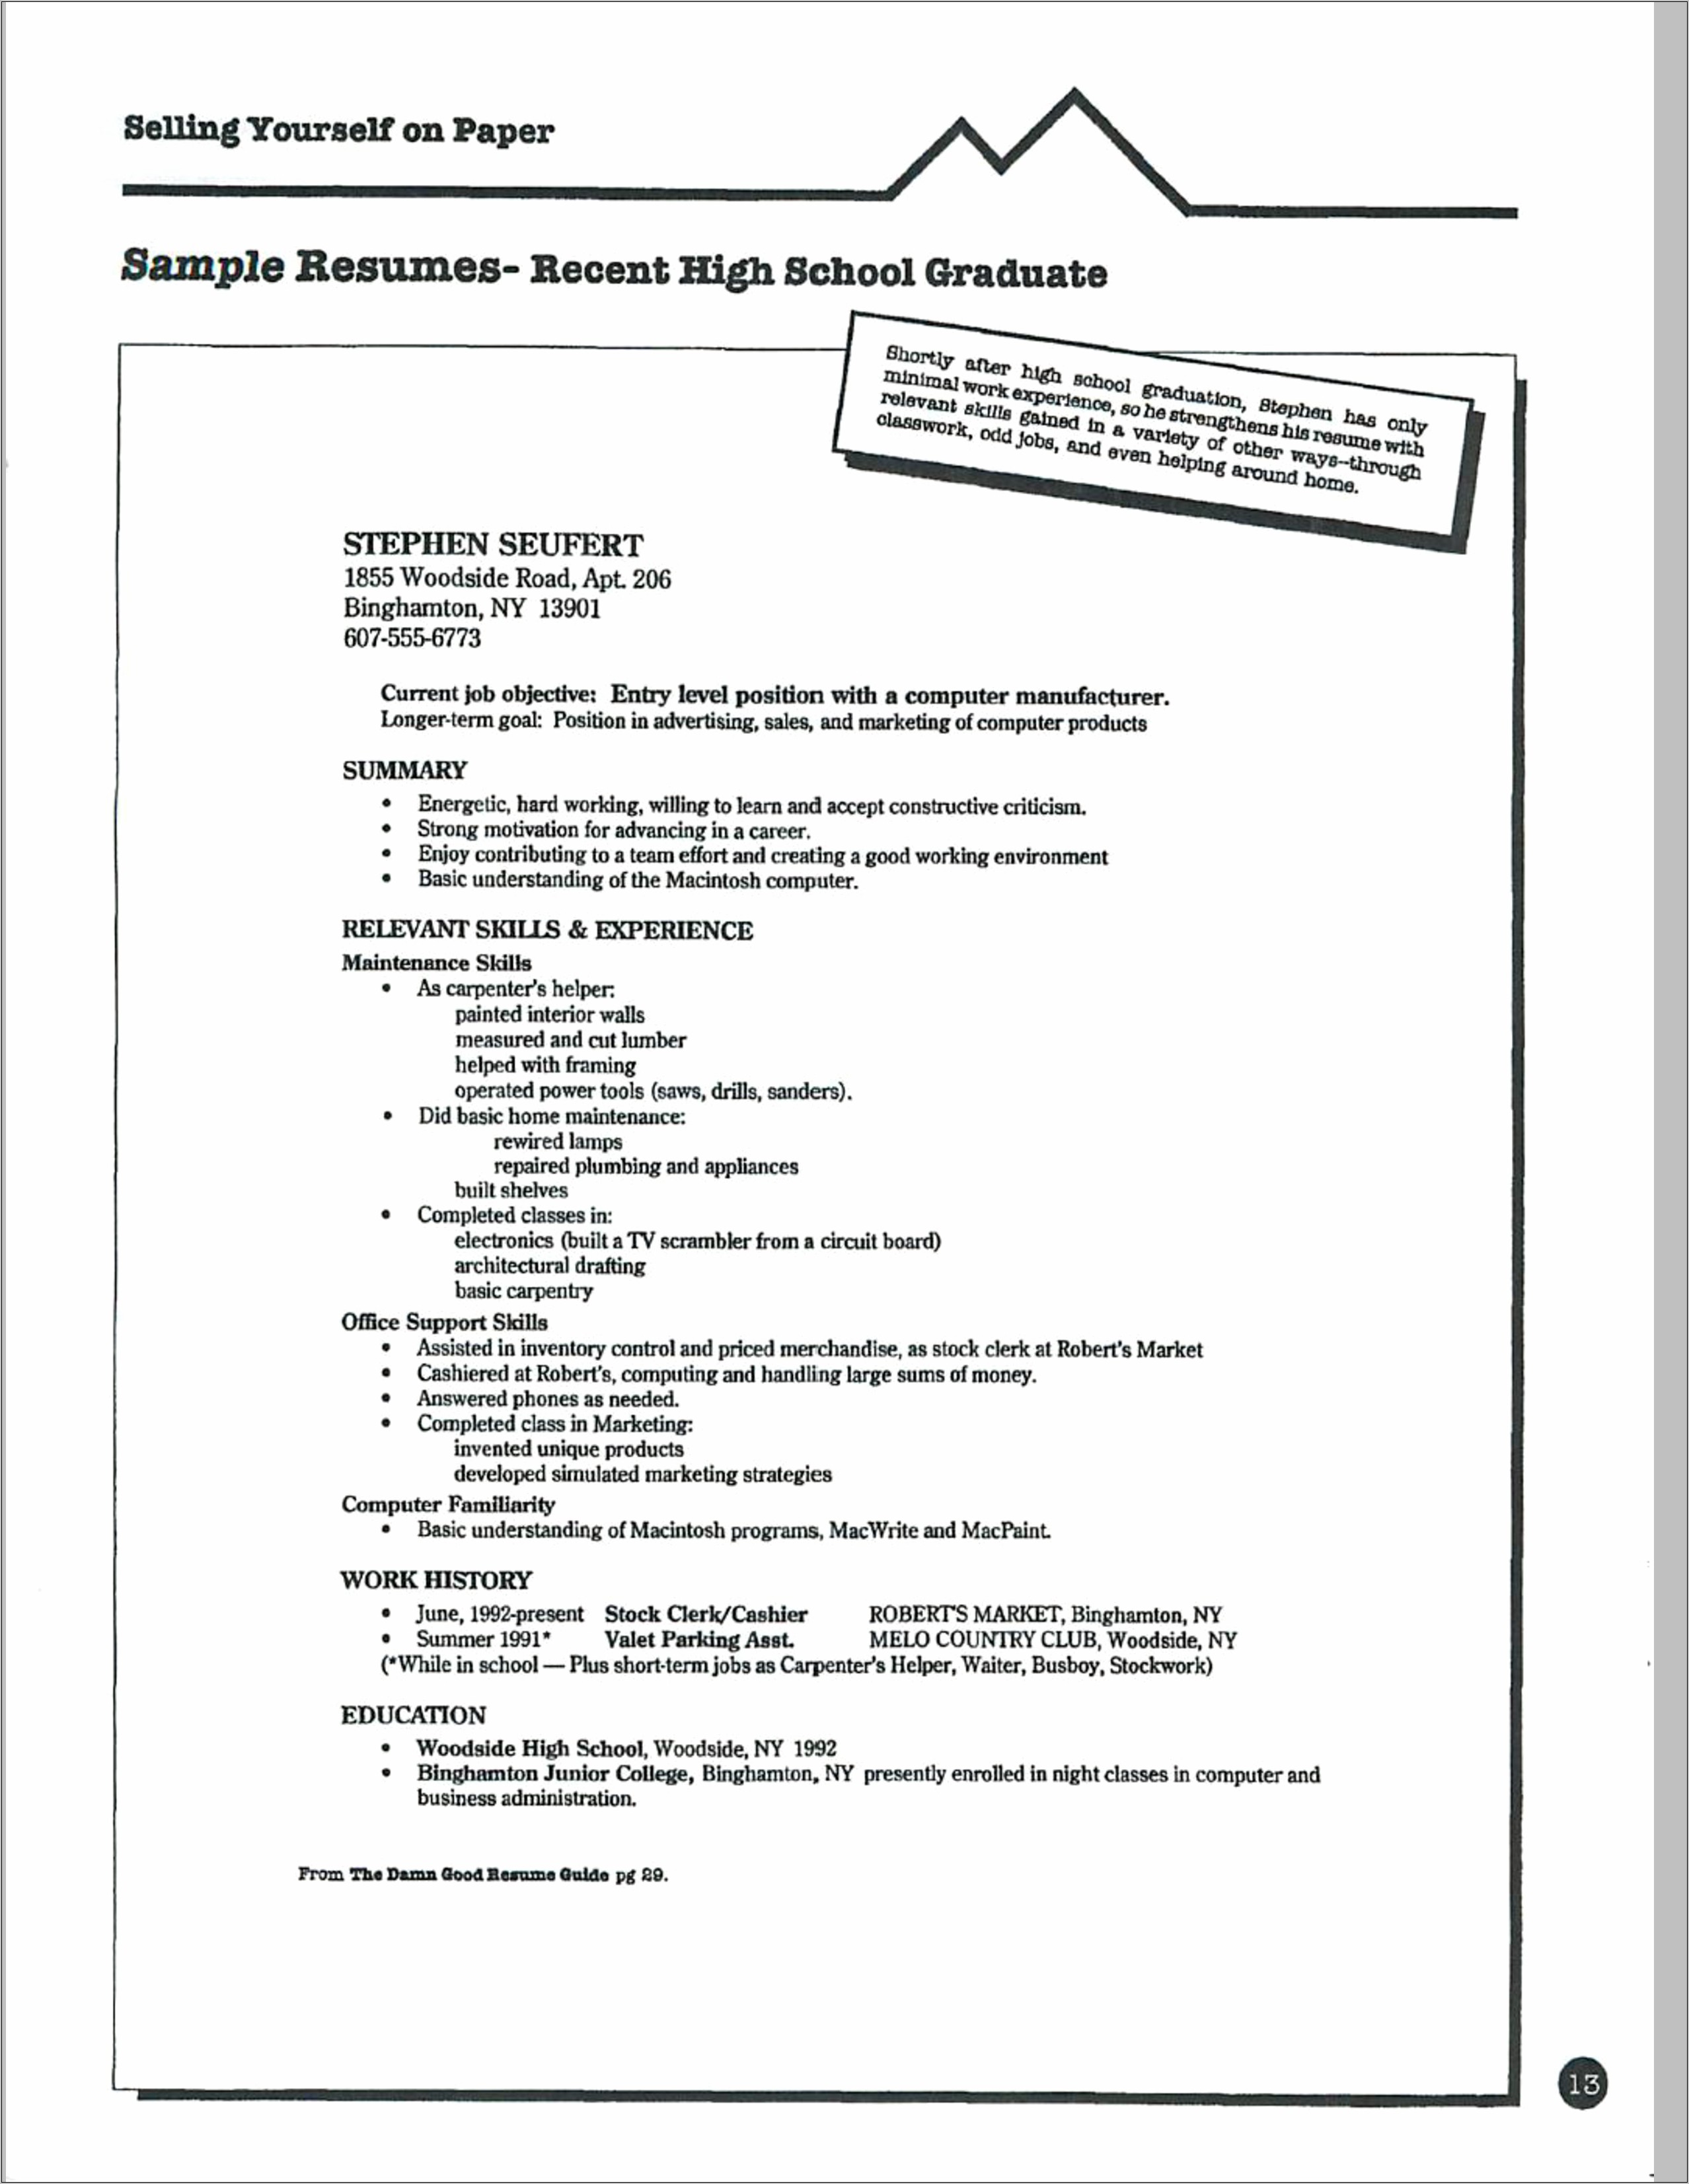 Sample Of Resume For Highschool Graduate